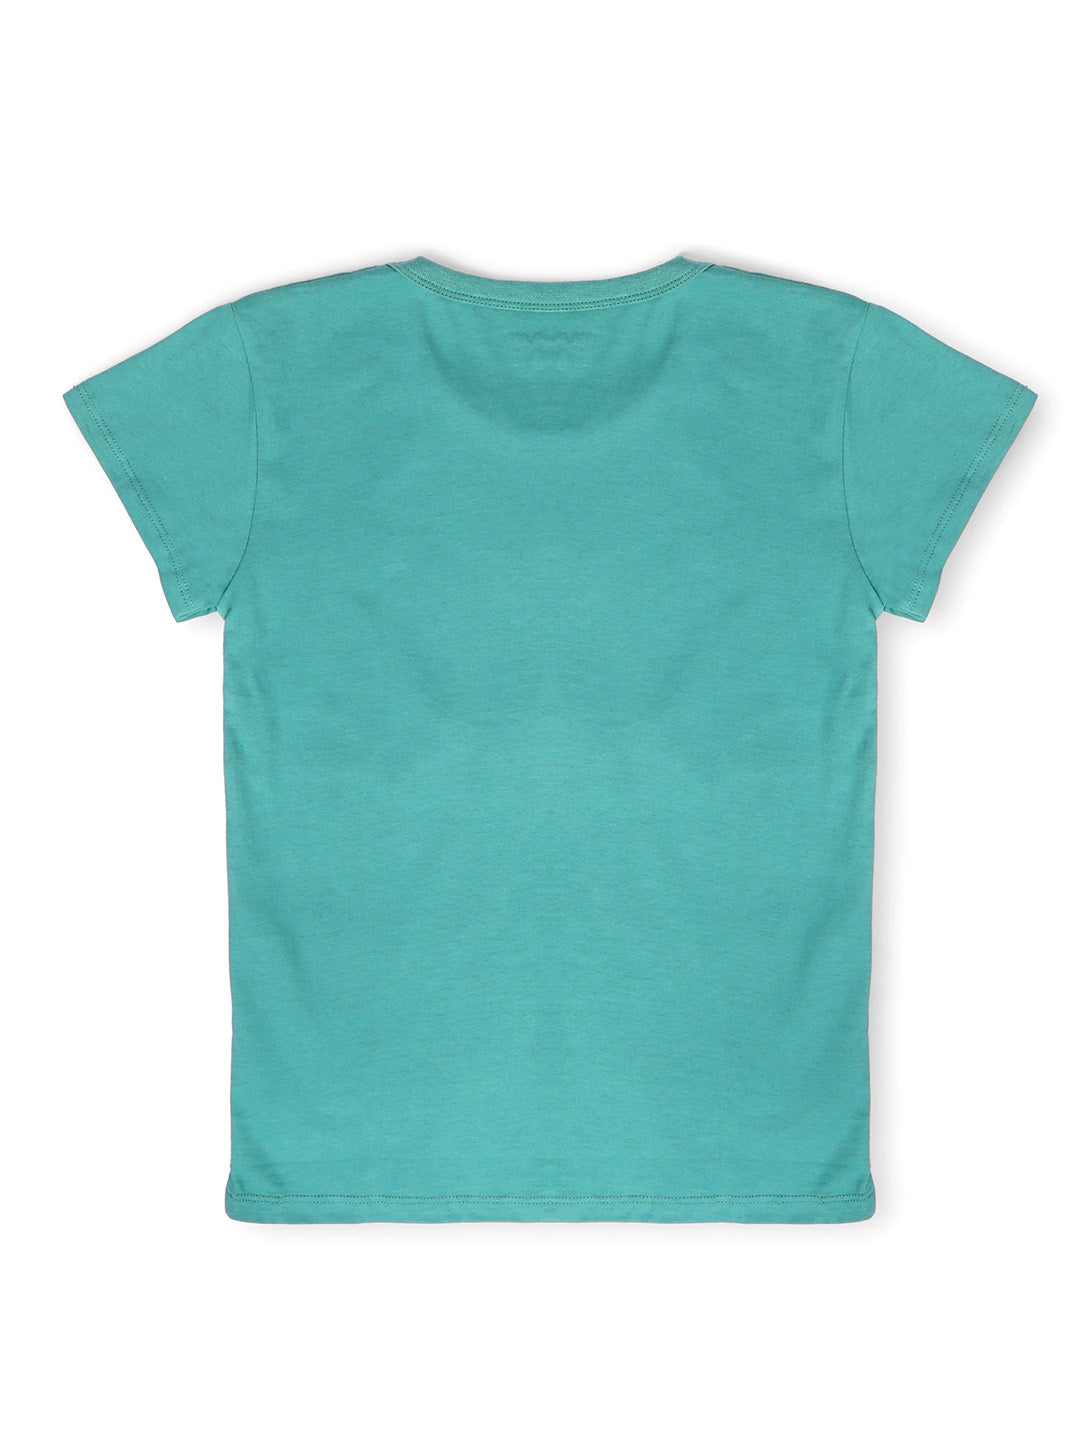 TWGE - Kids Tshirt for Girls - Printed Regular Fit Tees - Color Mint green